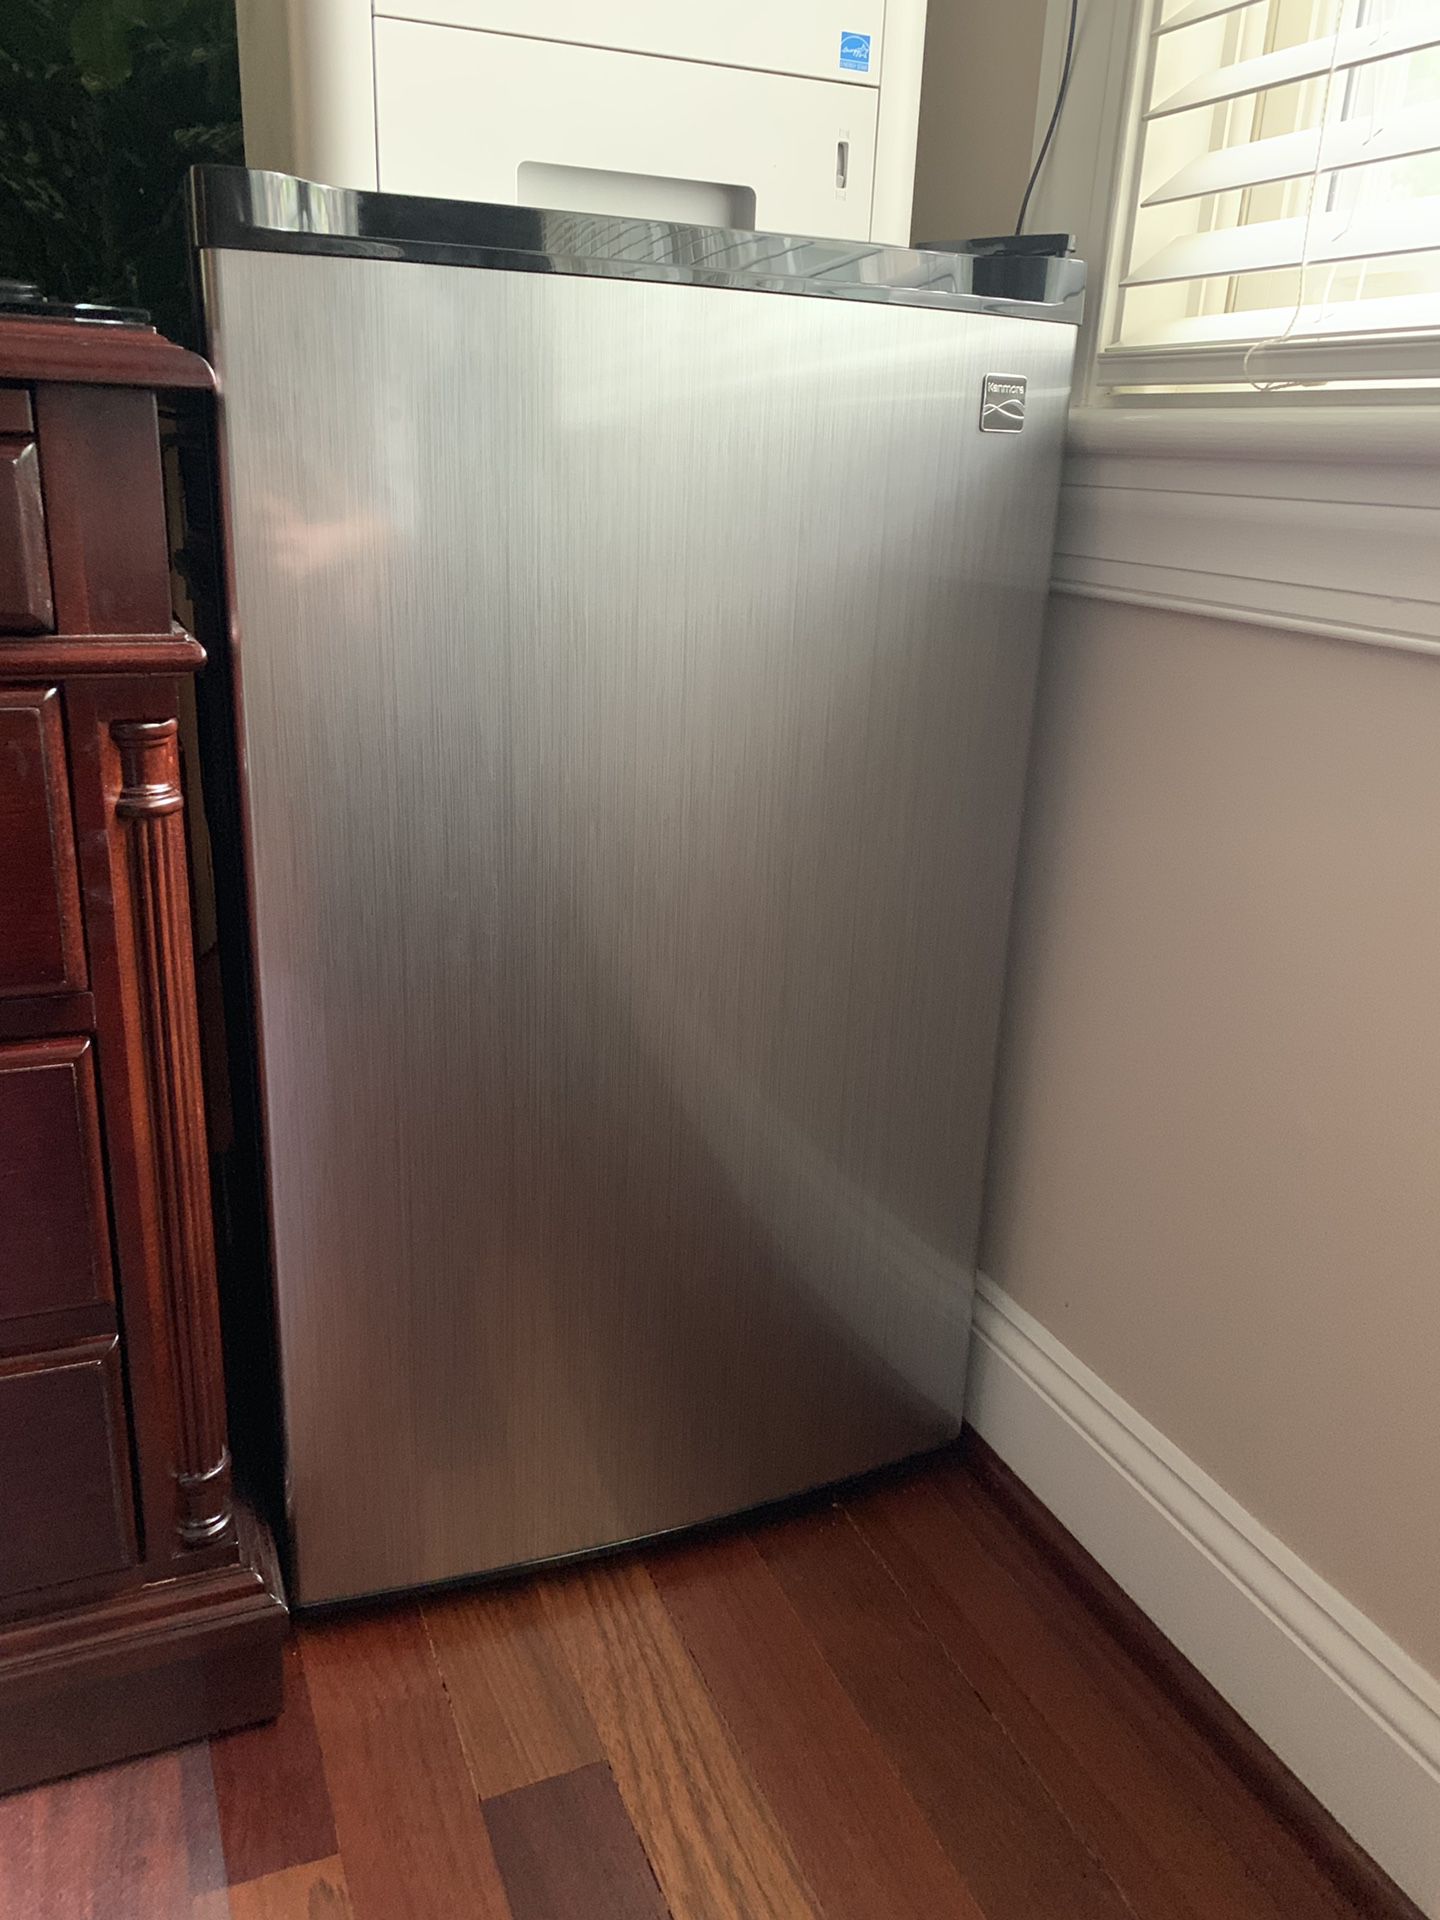 Kenmore 4.5 cu ft compact refrigerator